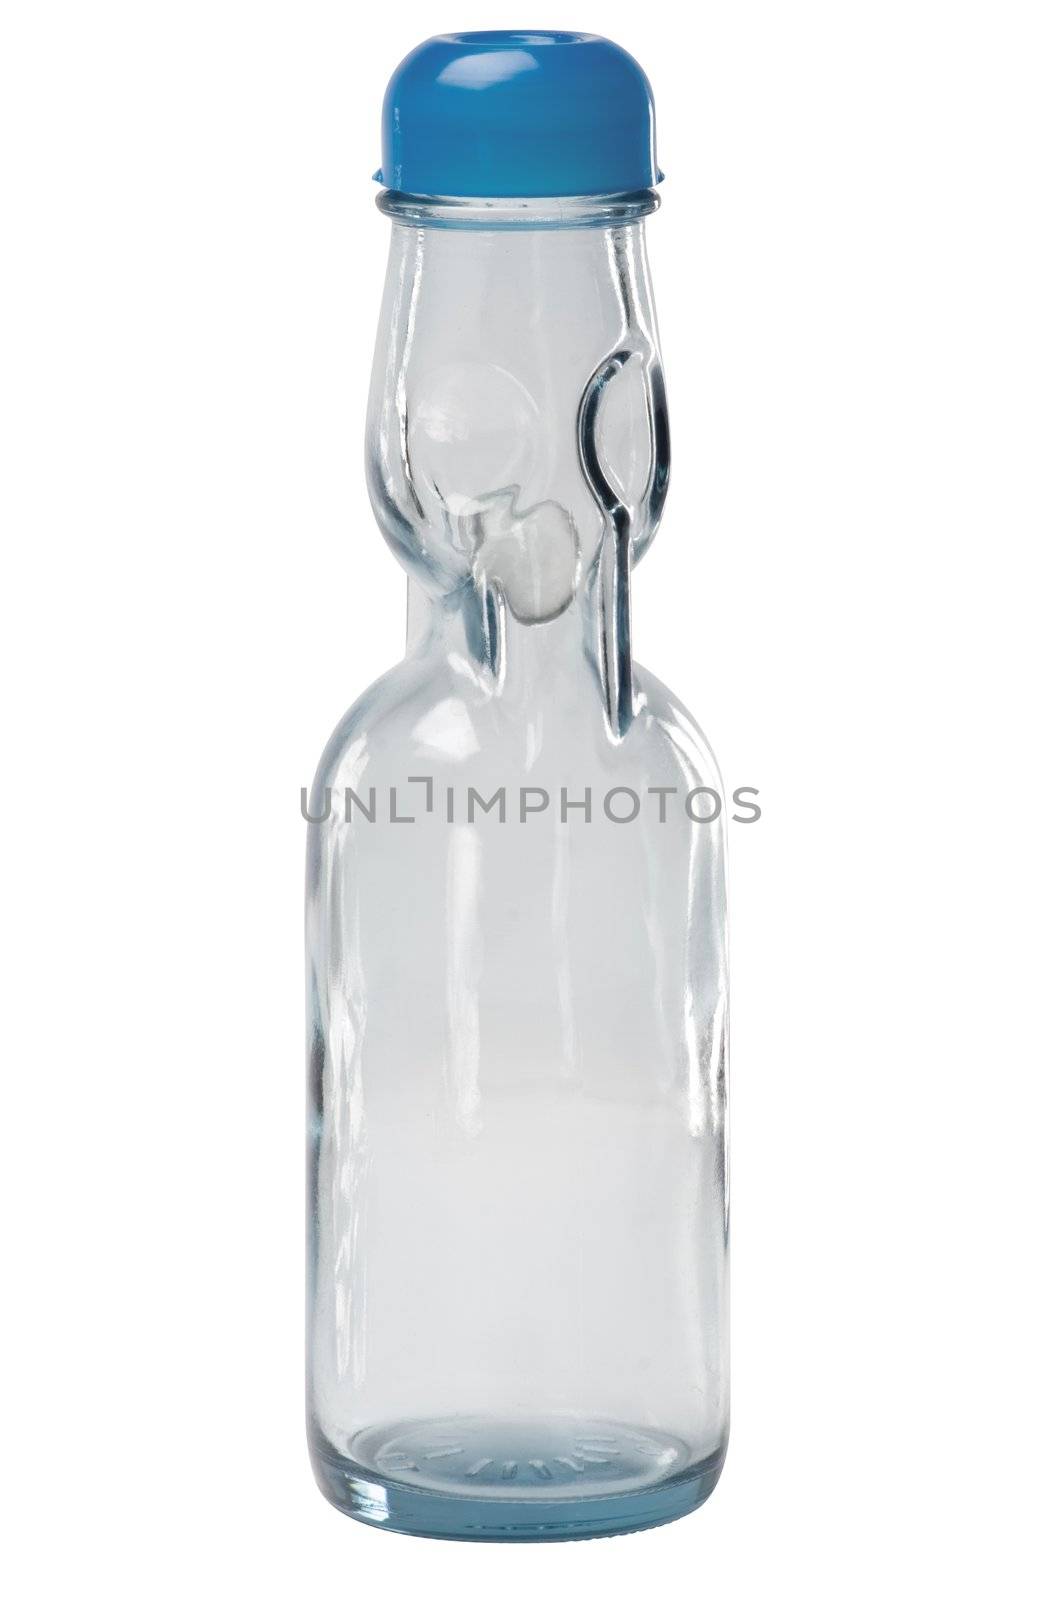 lamune bottle by mypstudio